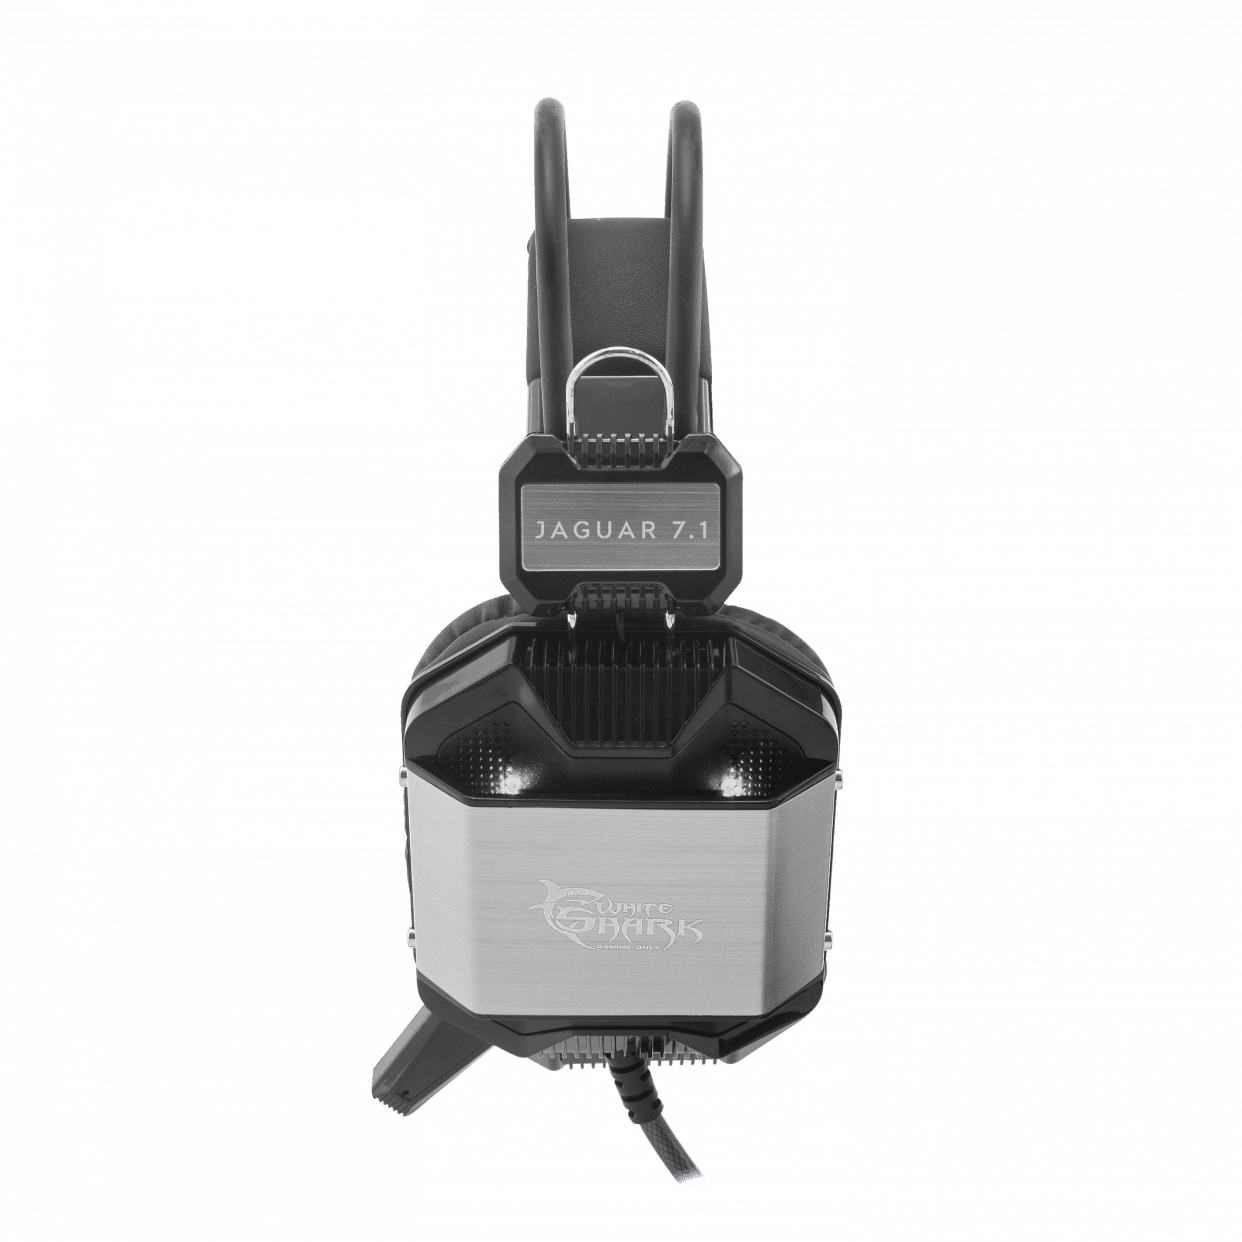 White Shark JAGUAR 7.1 USB Gaming Headset (Black/Silver) - GameStore.mt | Powered by Flutisat